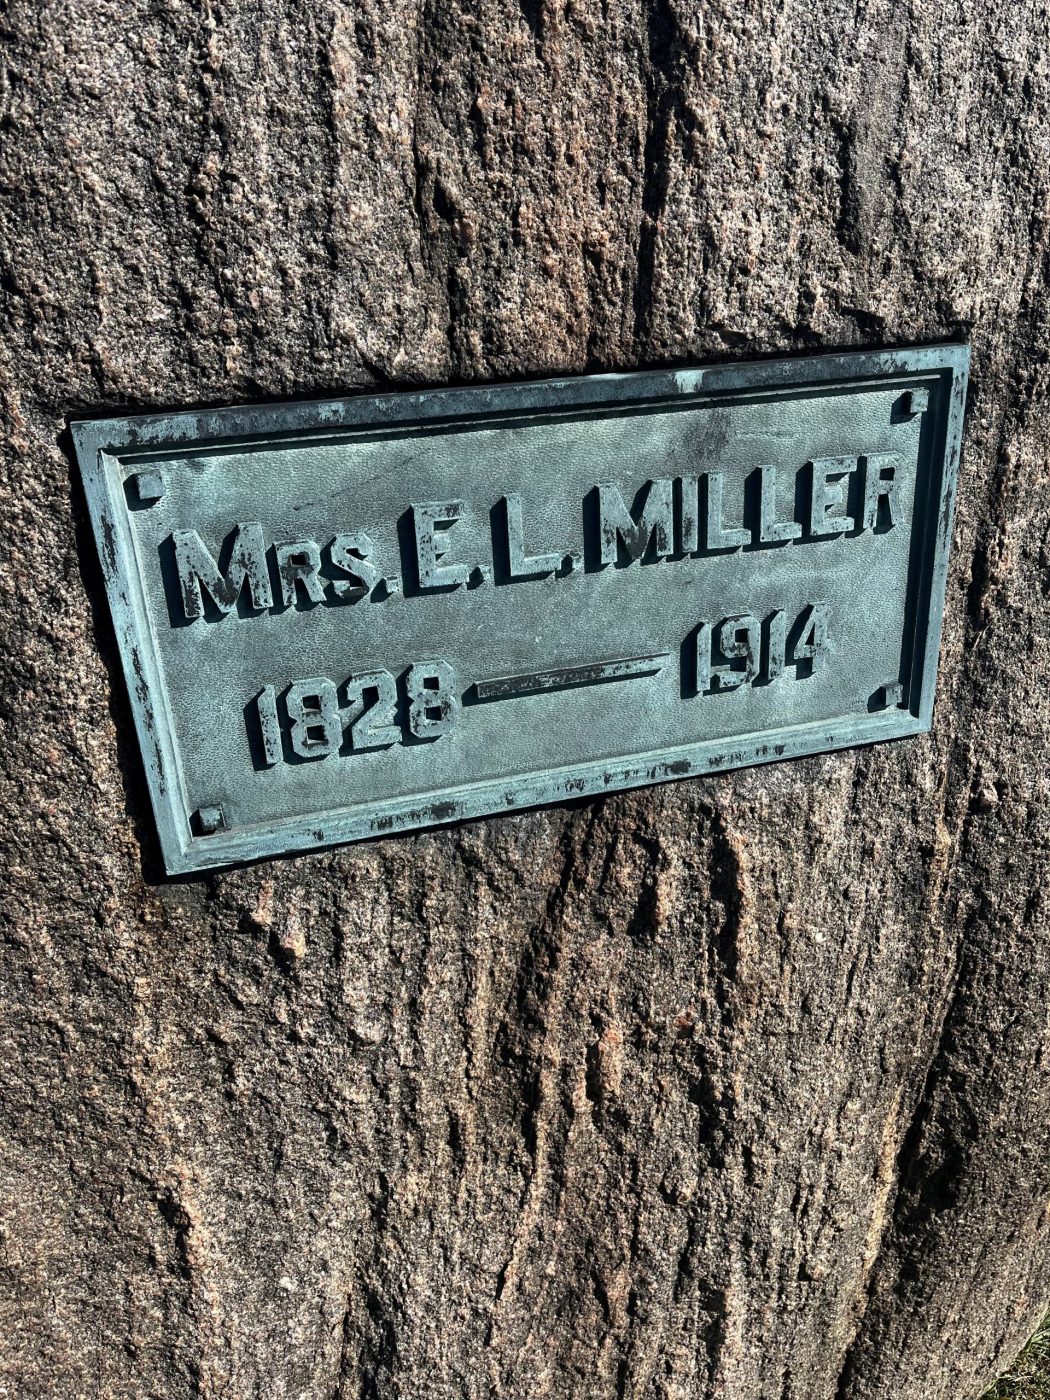 Emma Miller's marker at the Dayton National Cemetery. (VA)